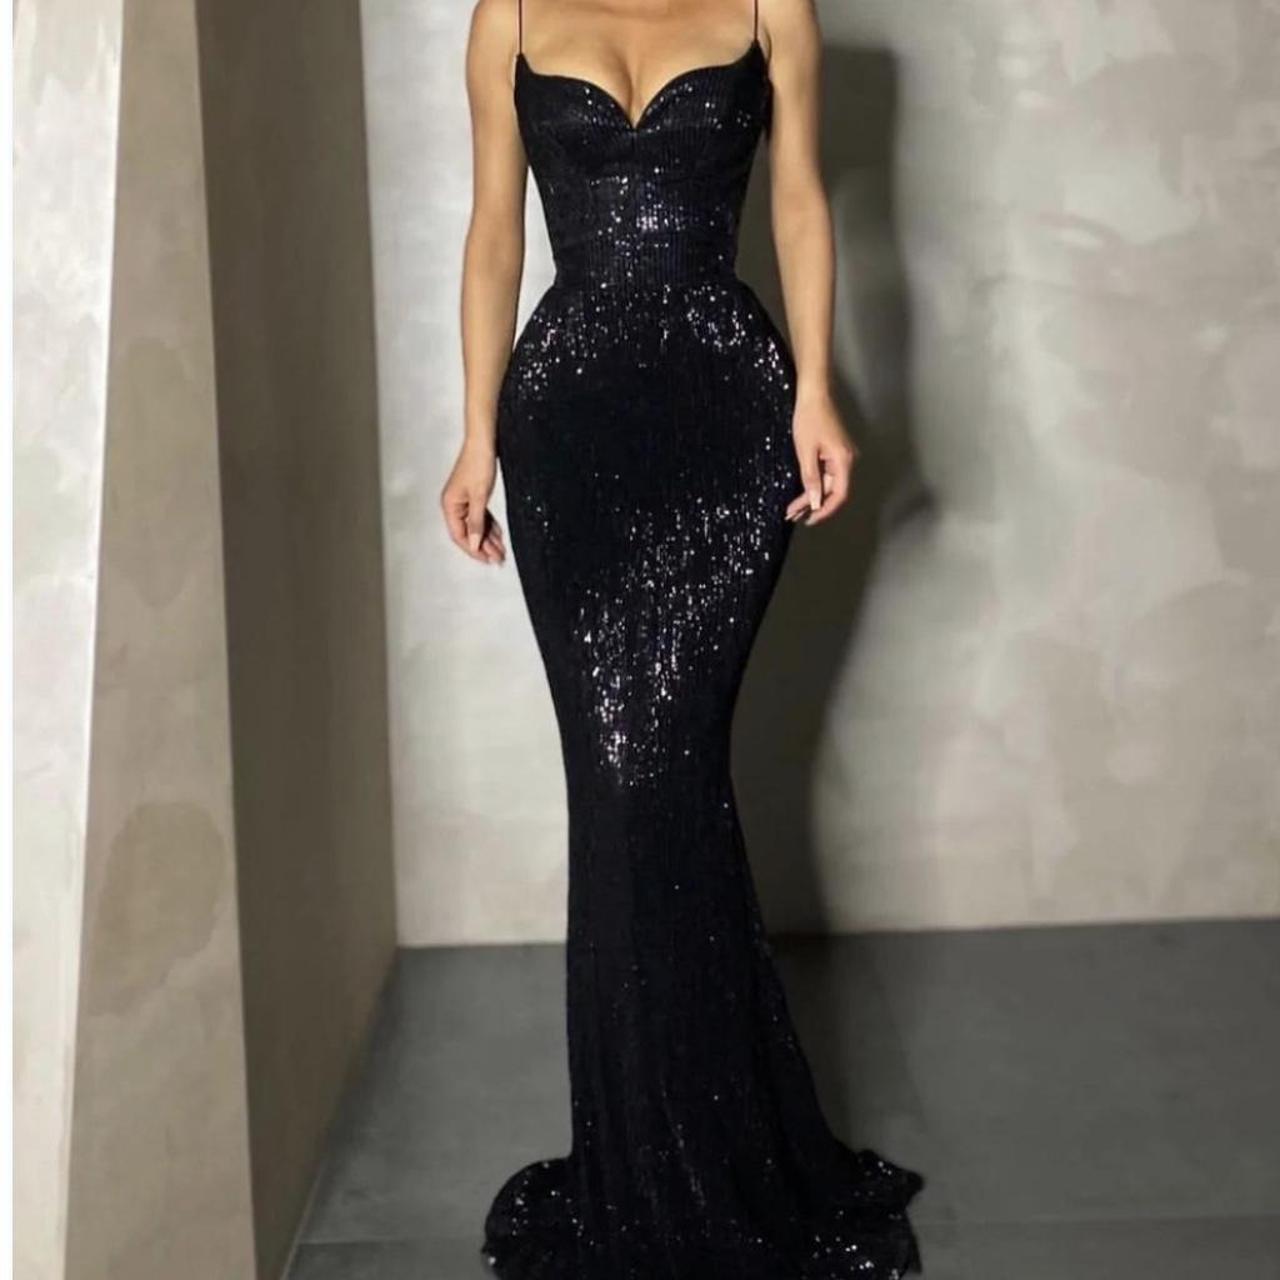 lia stublla saskia dress black HIRE $200 size 4-10... - Depop